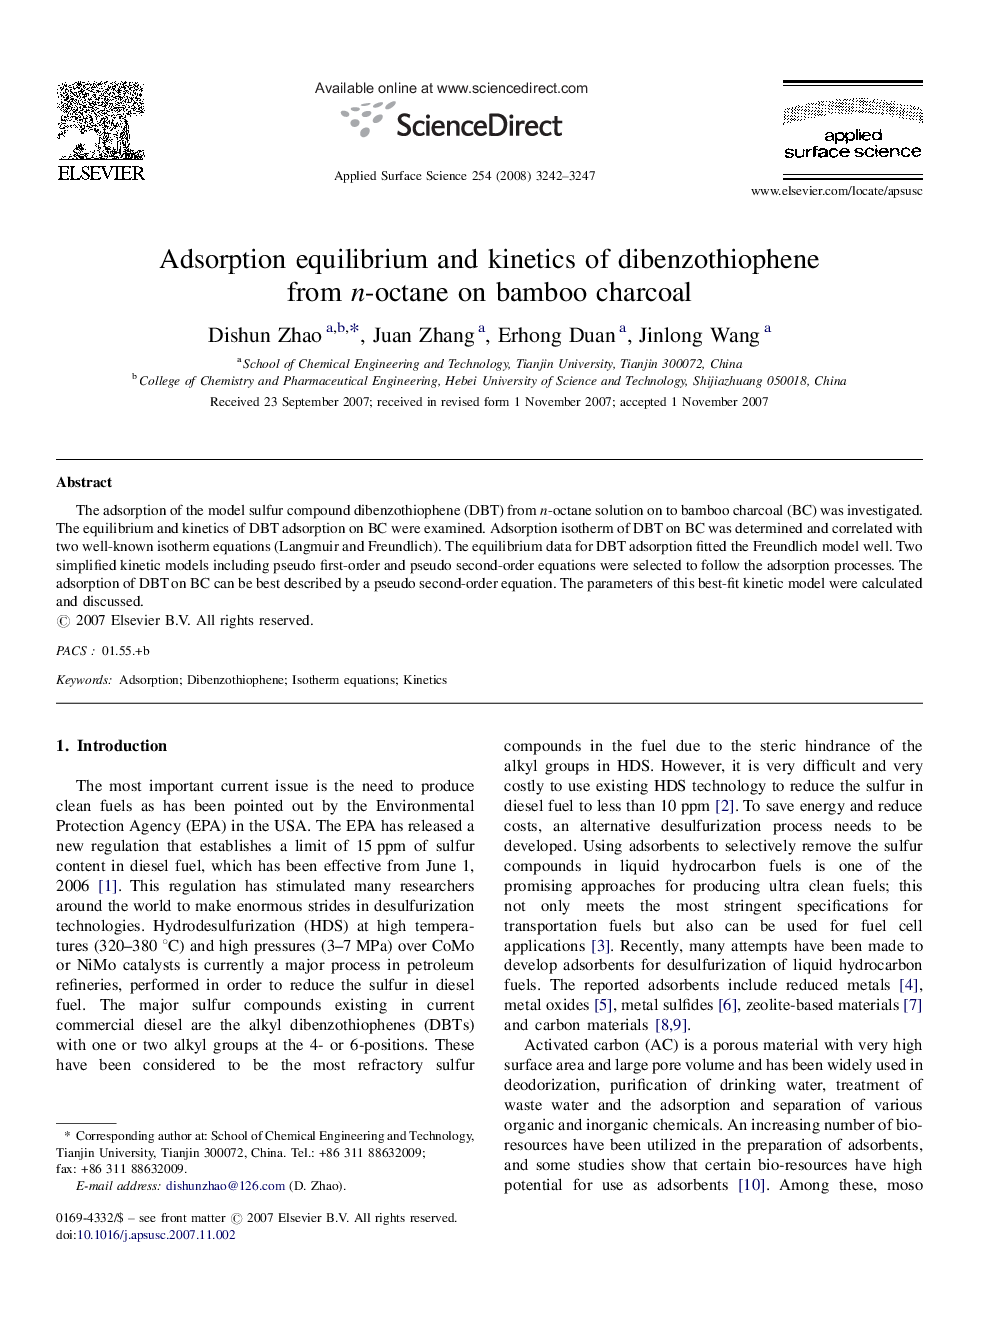 Adsorption equilibrium and kinetics of dibenzothiophene from n-octane on bamboo charcoal